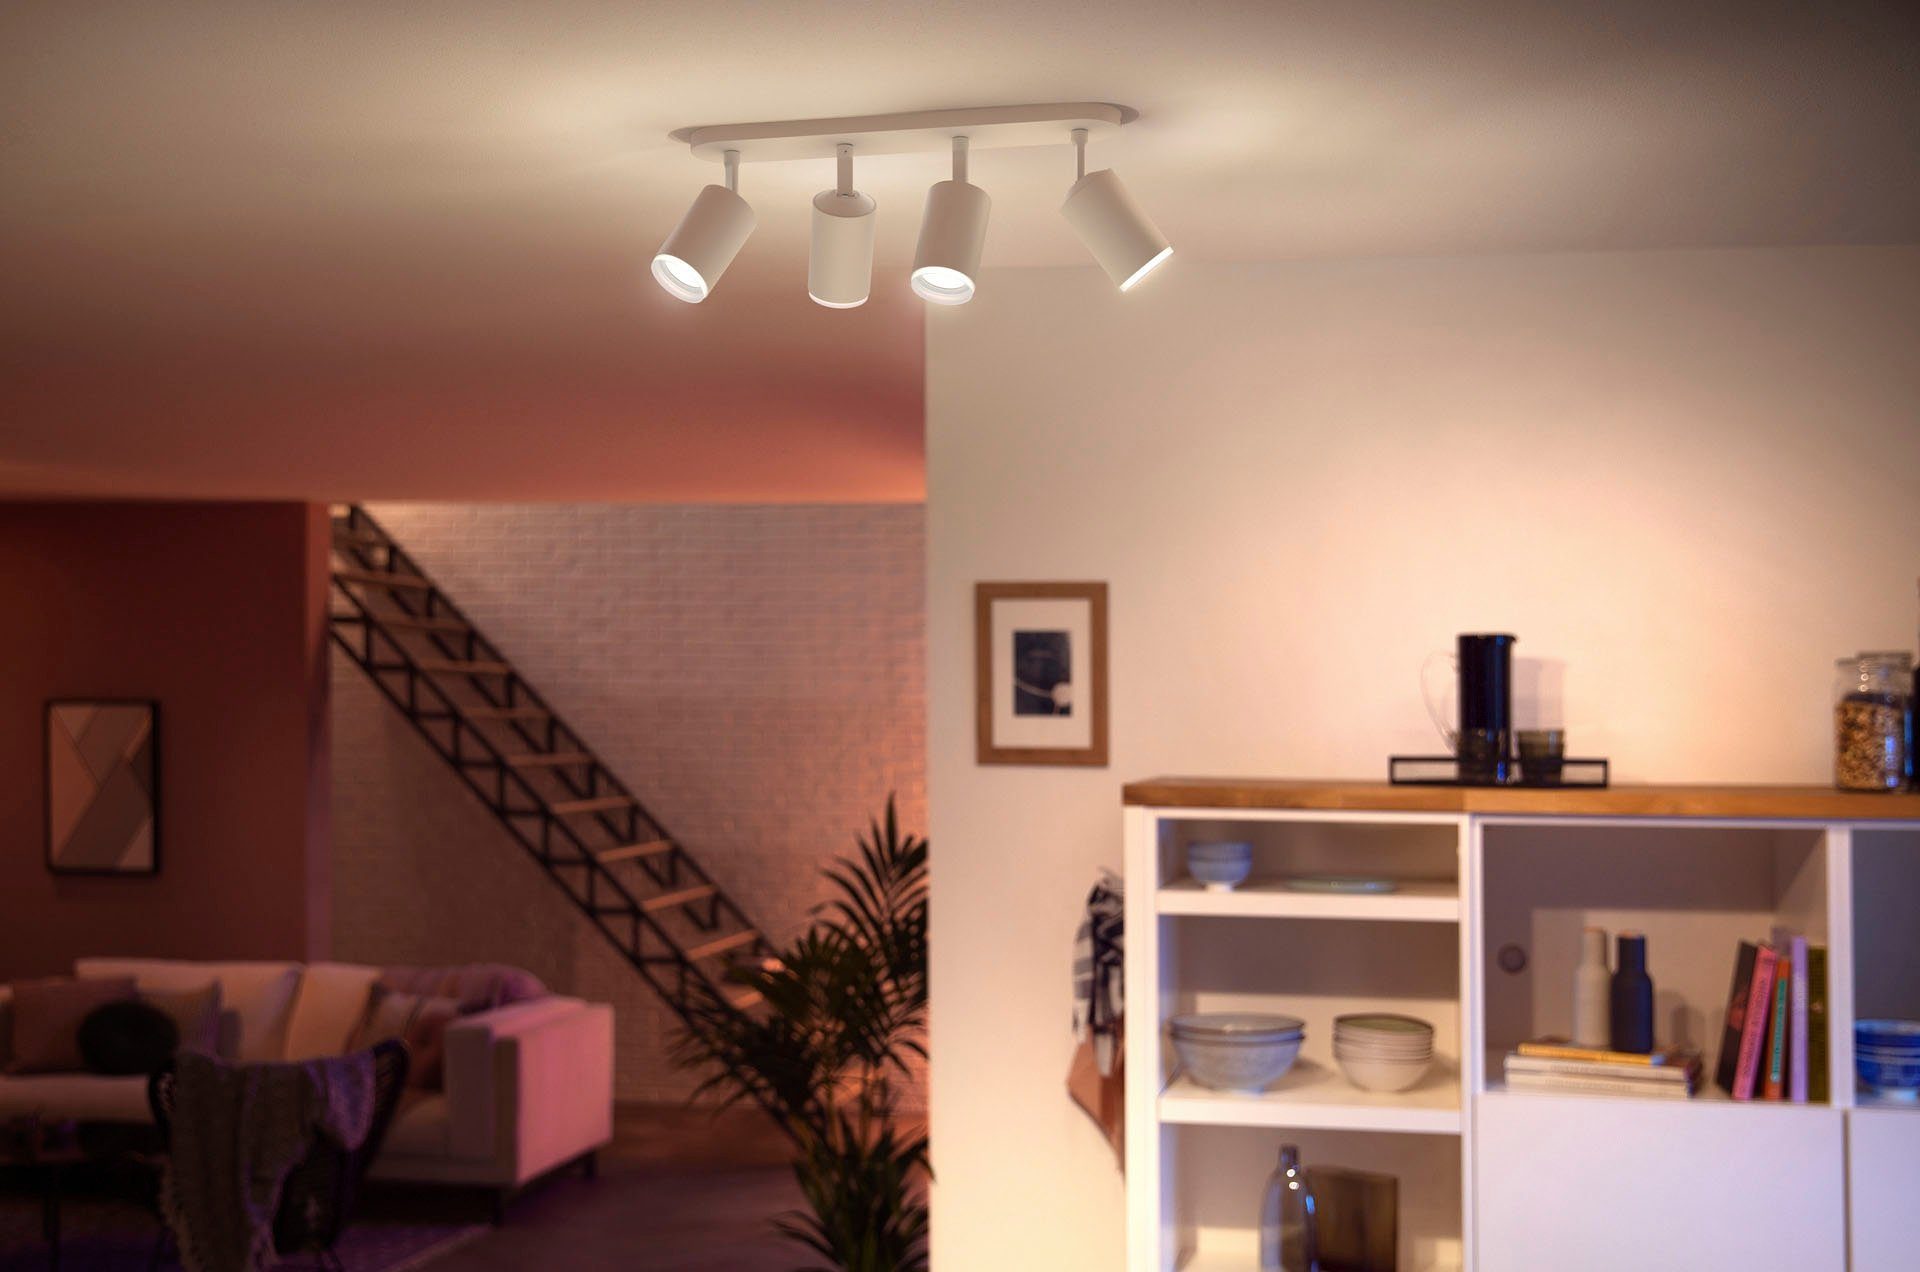 Philips Hue LED Flutlichtstrahler Leuchtmittel Farbwechsler wechselbar, Dimmfunktion, Fugato